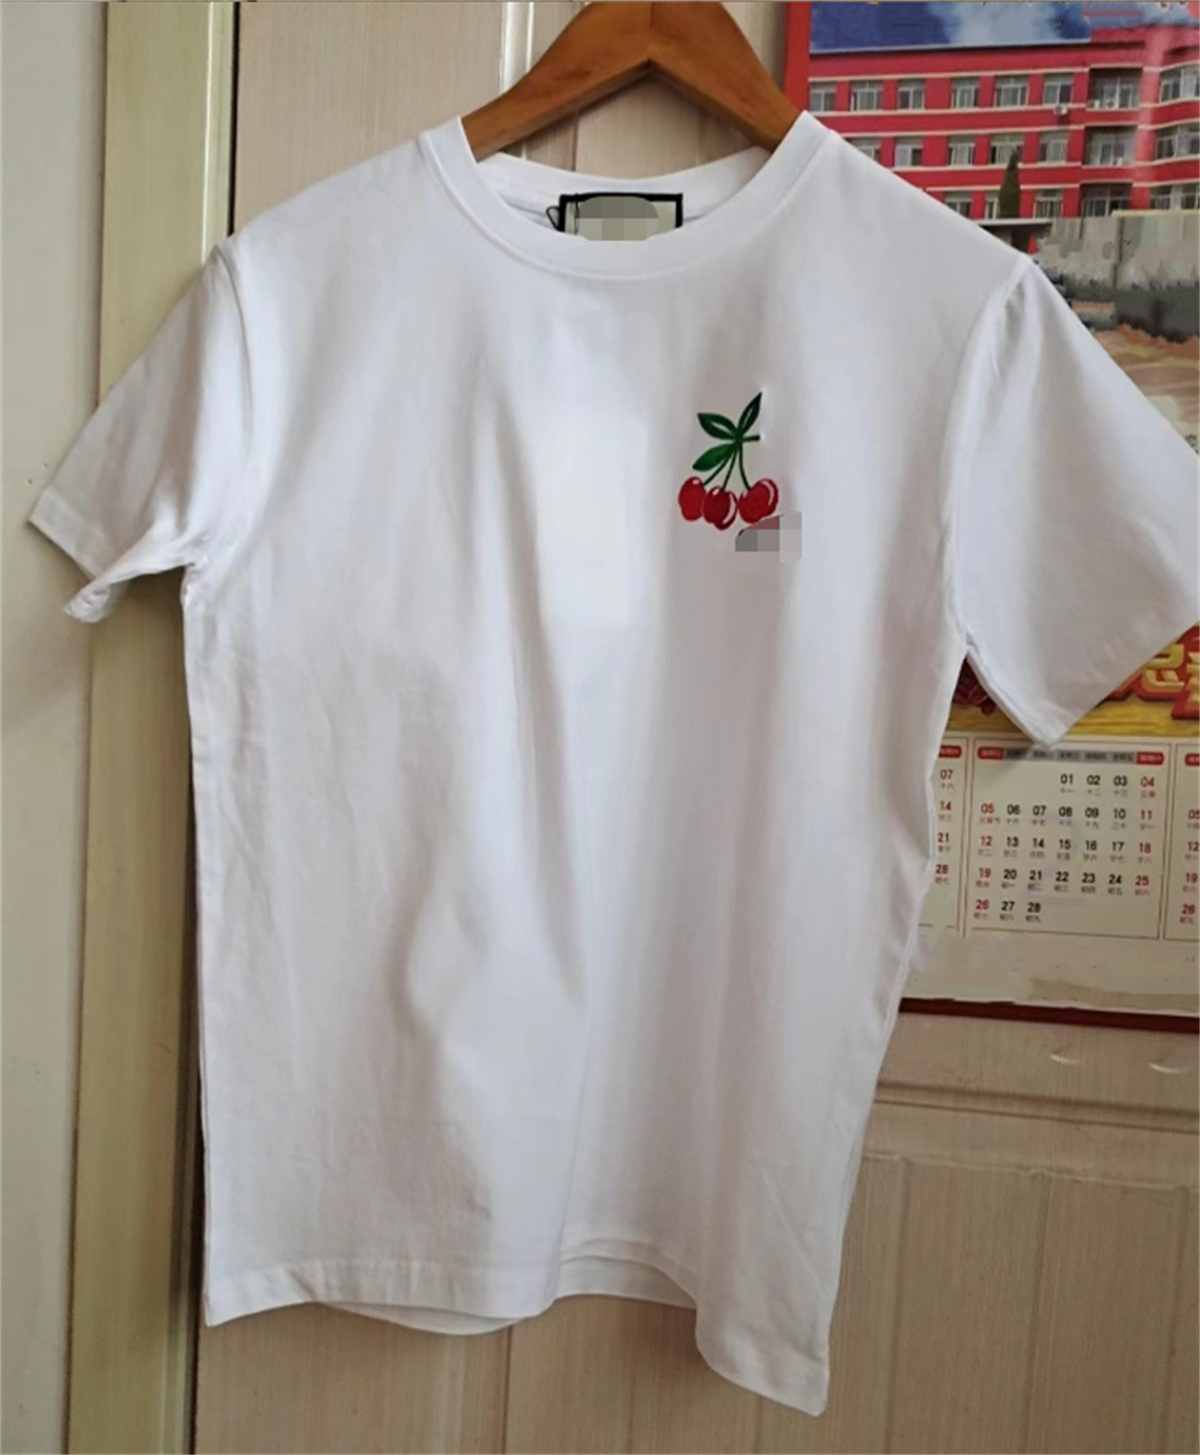 Womens Shirt Cotton Men's T-shirts Designer T Shirt Summer Clothing Young Mens T-shirts White Black Tshirts for Women Tees Big Size S-4XL